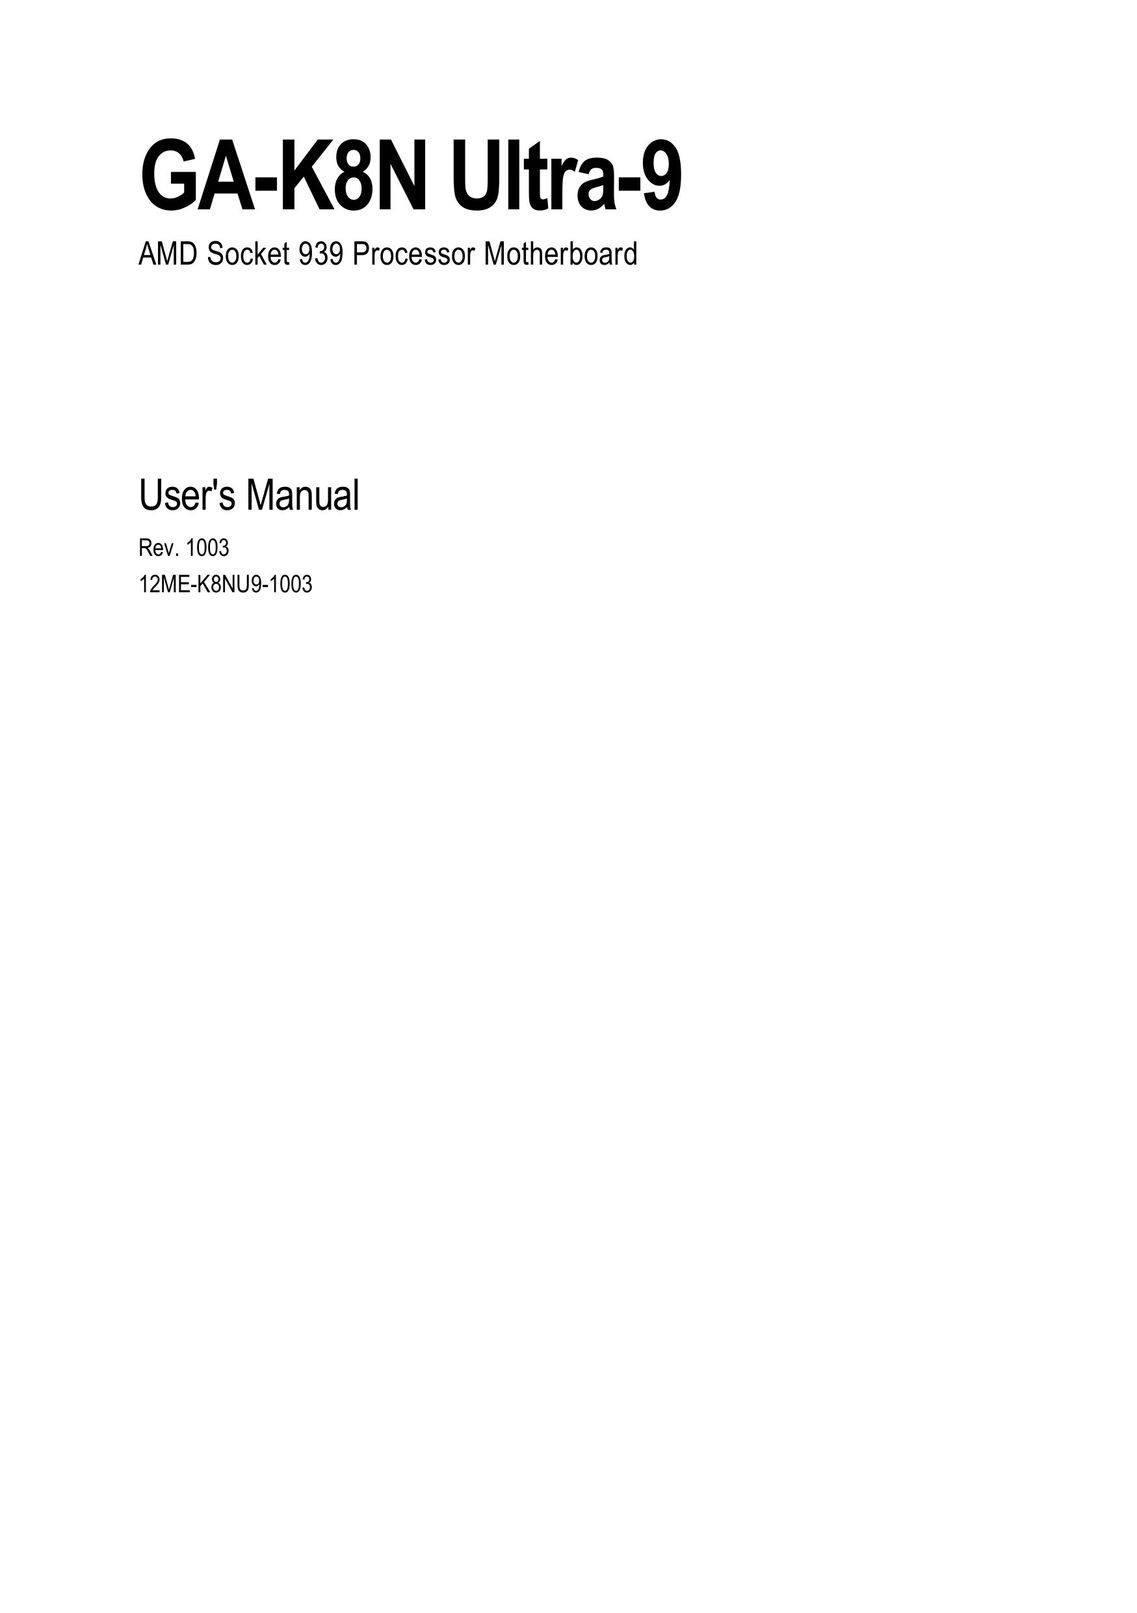 AMD GA-K8N ULTRA-9 Computer Hardware User Manual